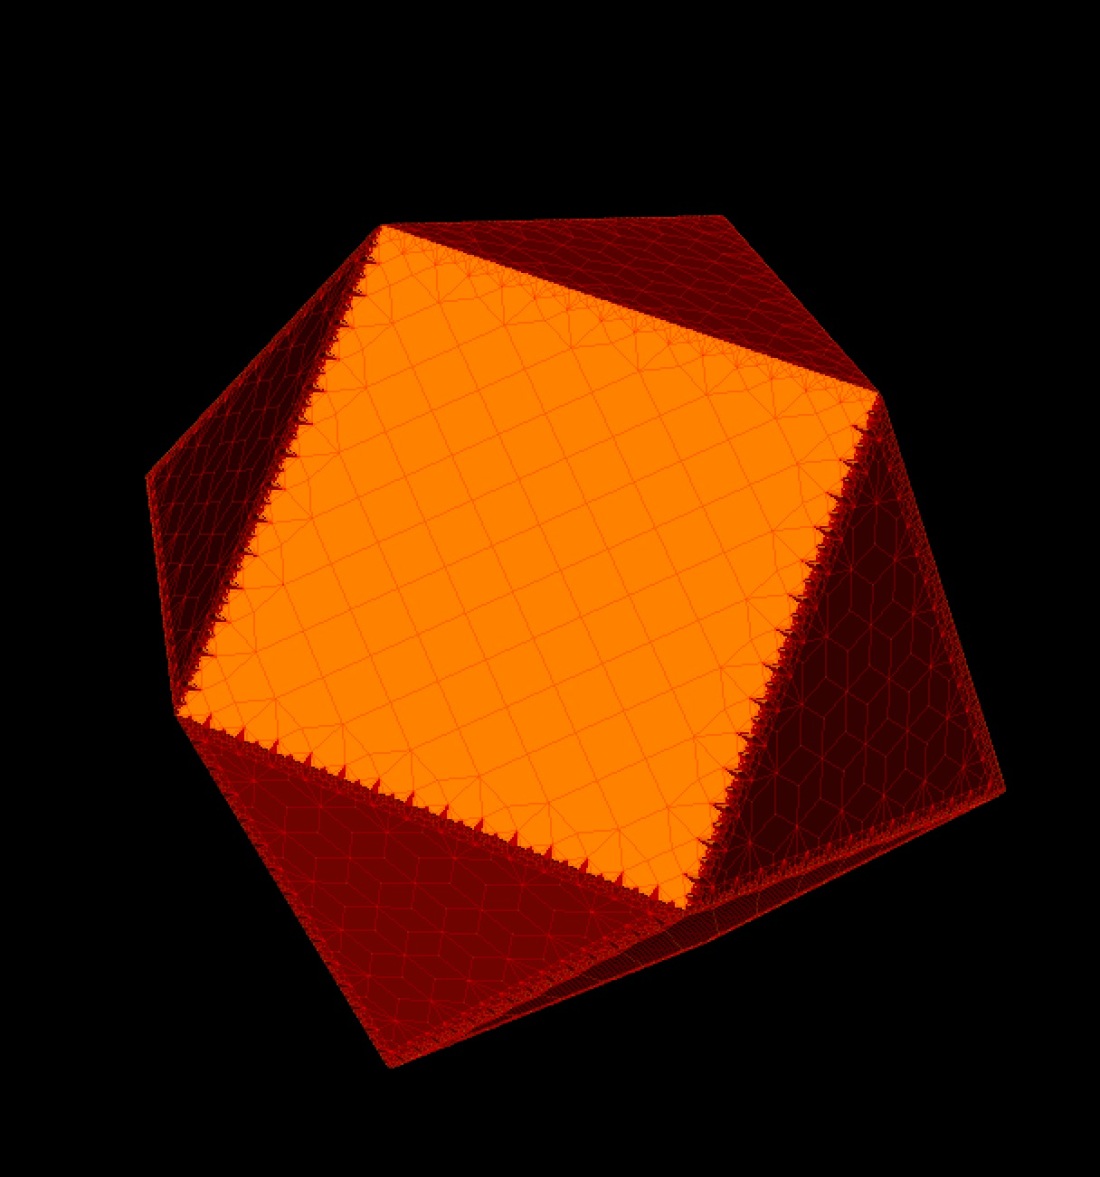 cubeoctahedron